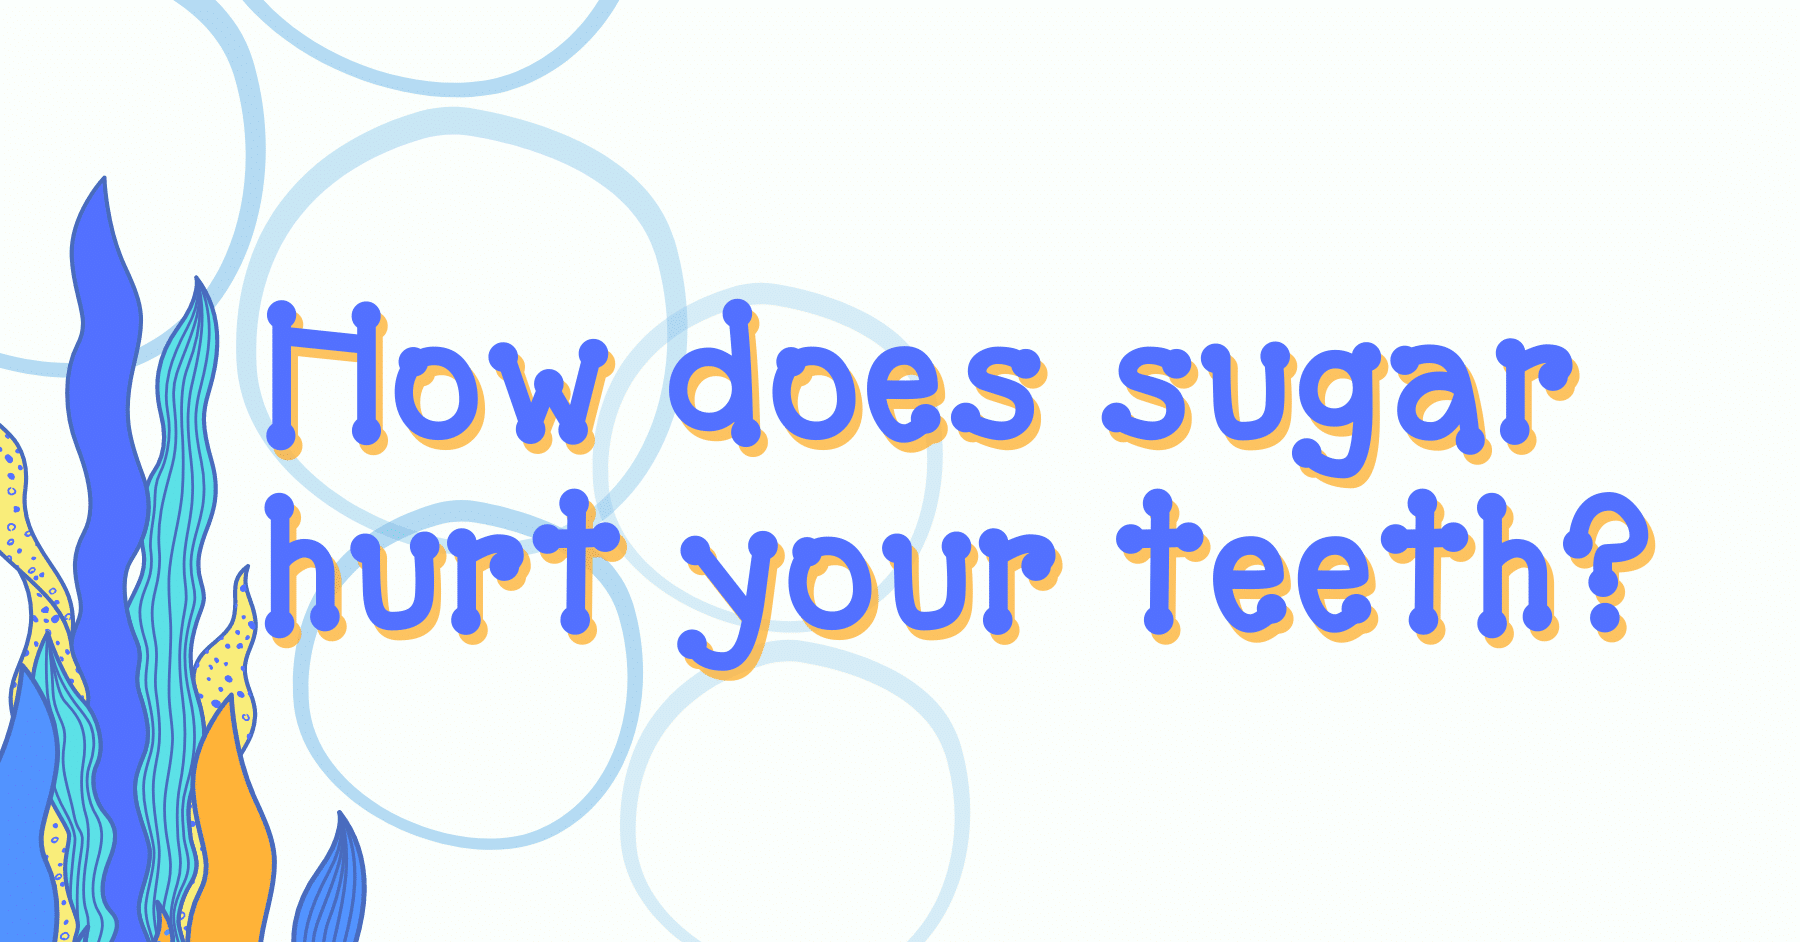 How does sugar hurt your teeth?